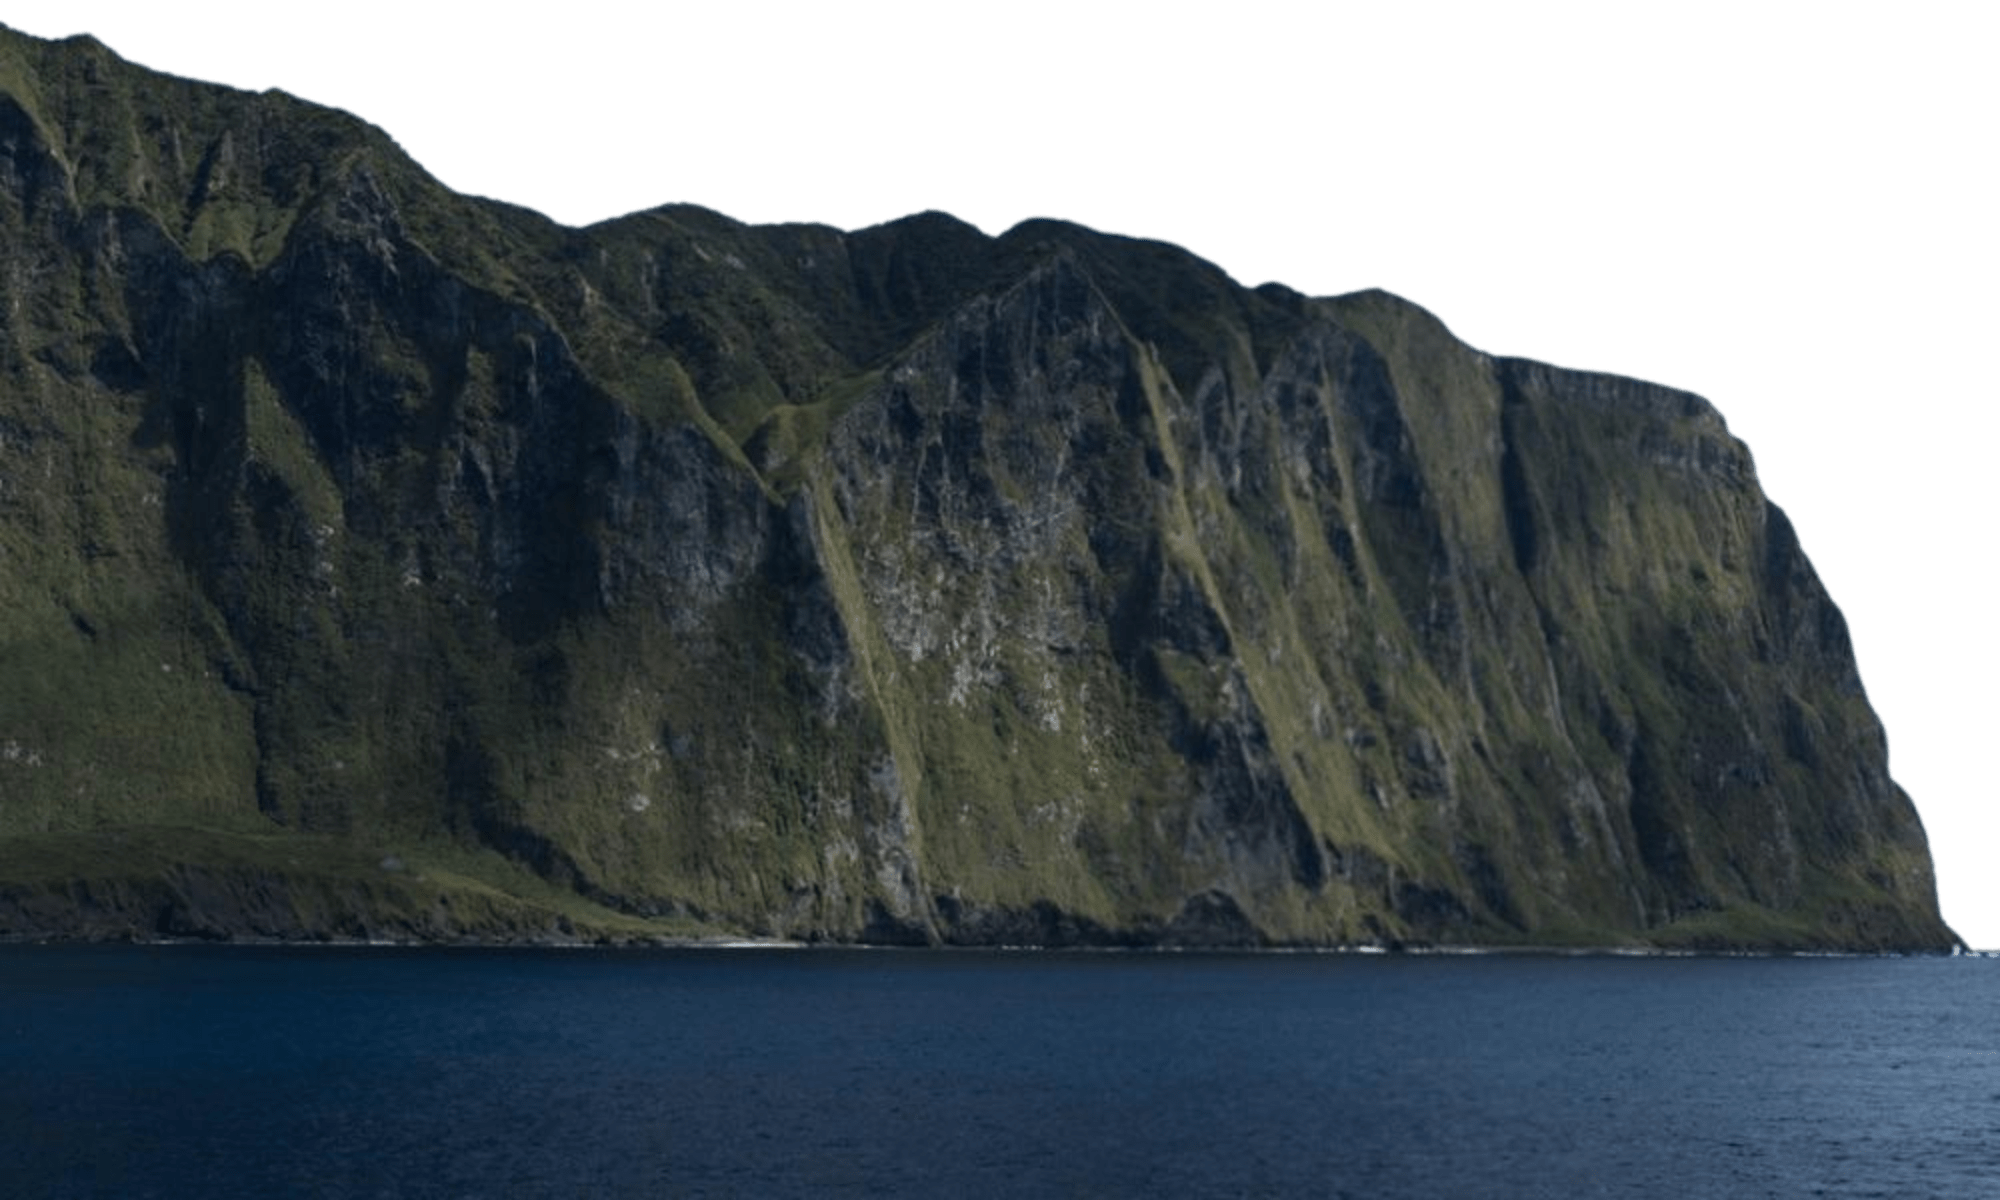 186 - Saint Helena, Ascension and Tristan da Cunha